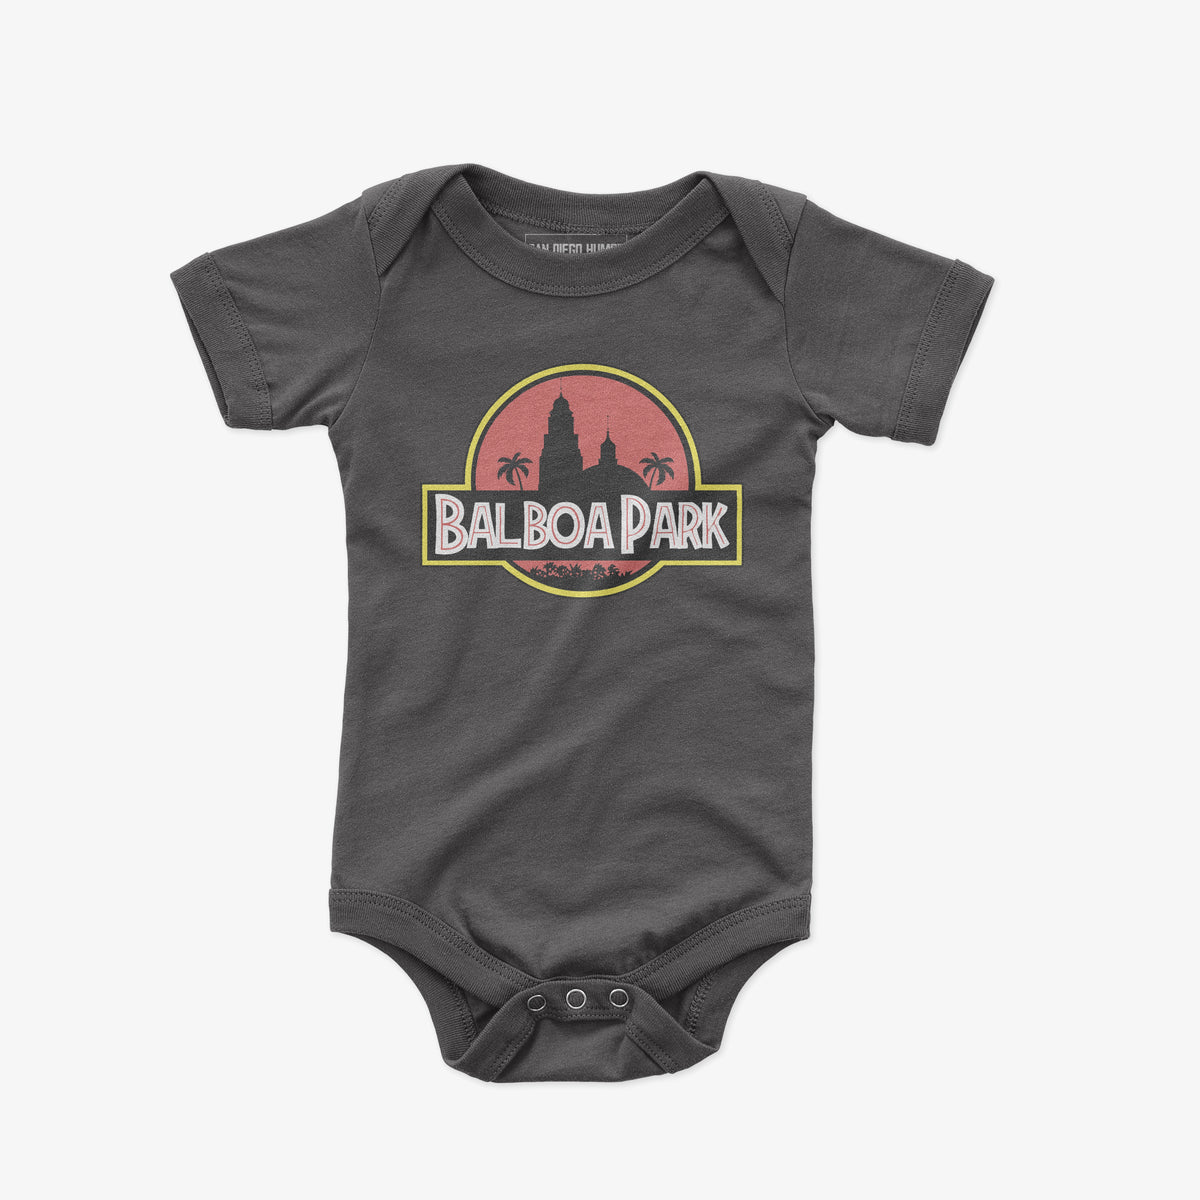 Balboa Park - Baby Onsie